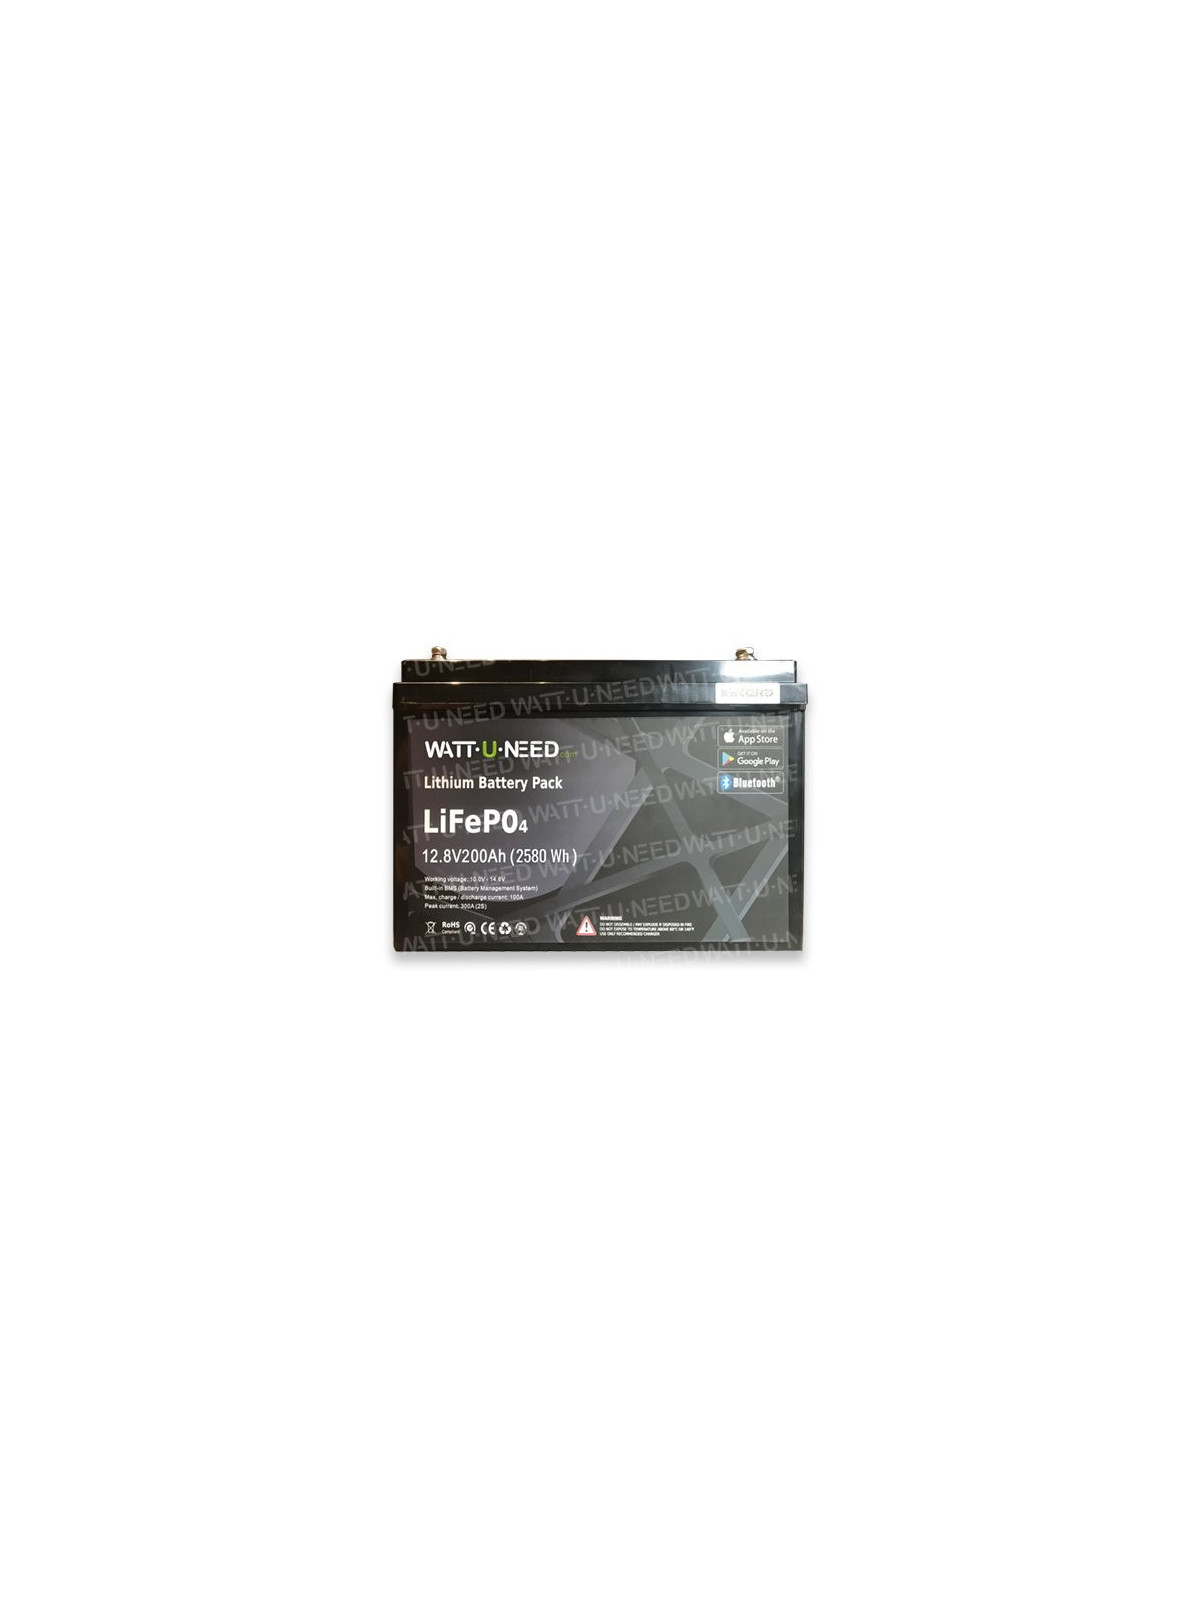 Batterie lithium Wattuneed 12.8V 200Ah